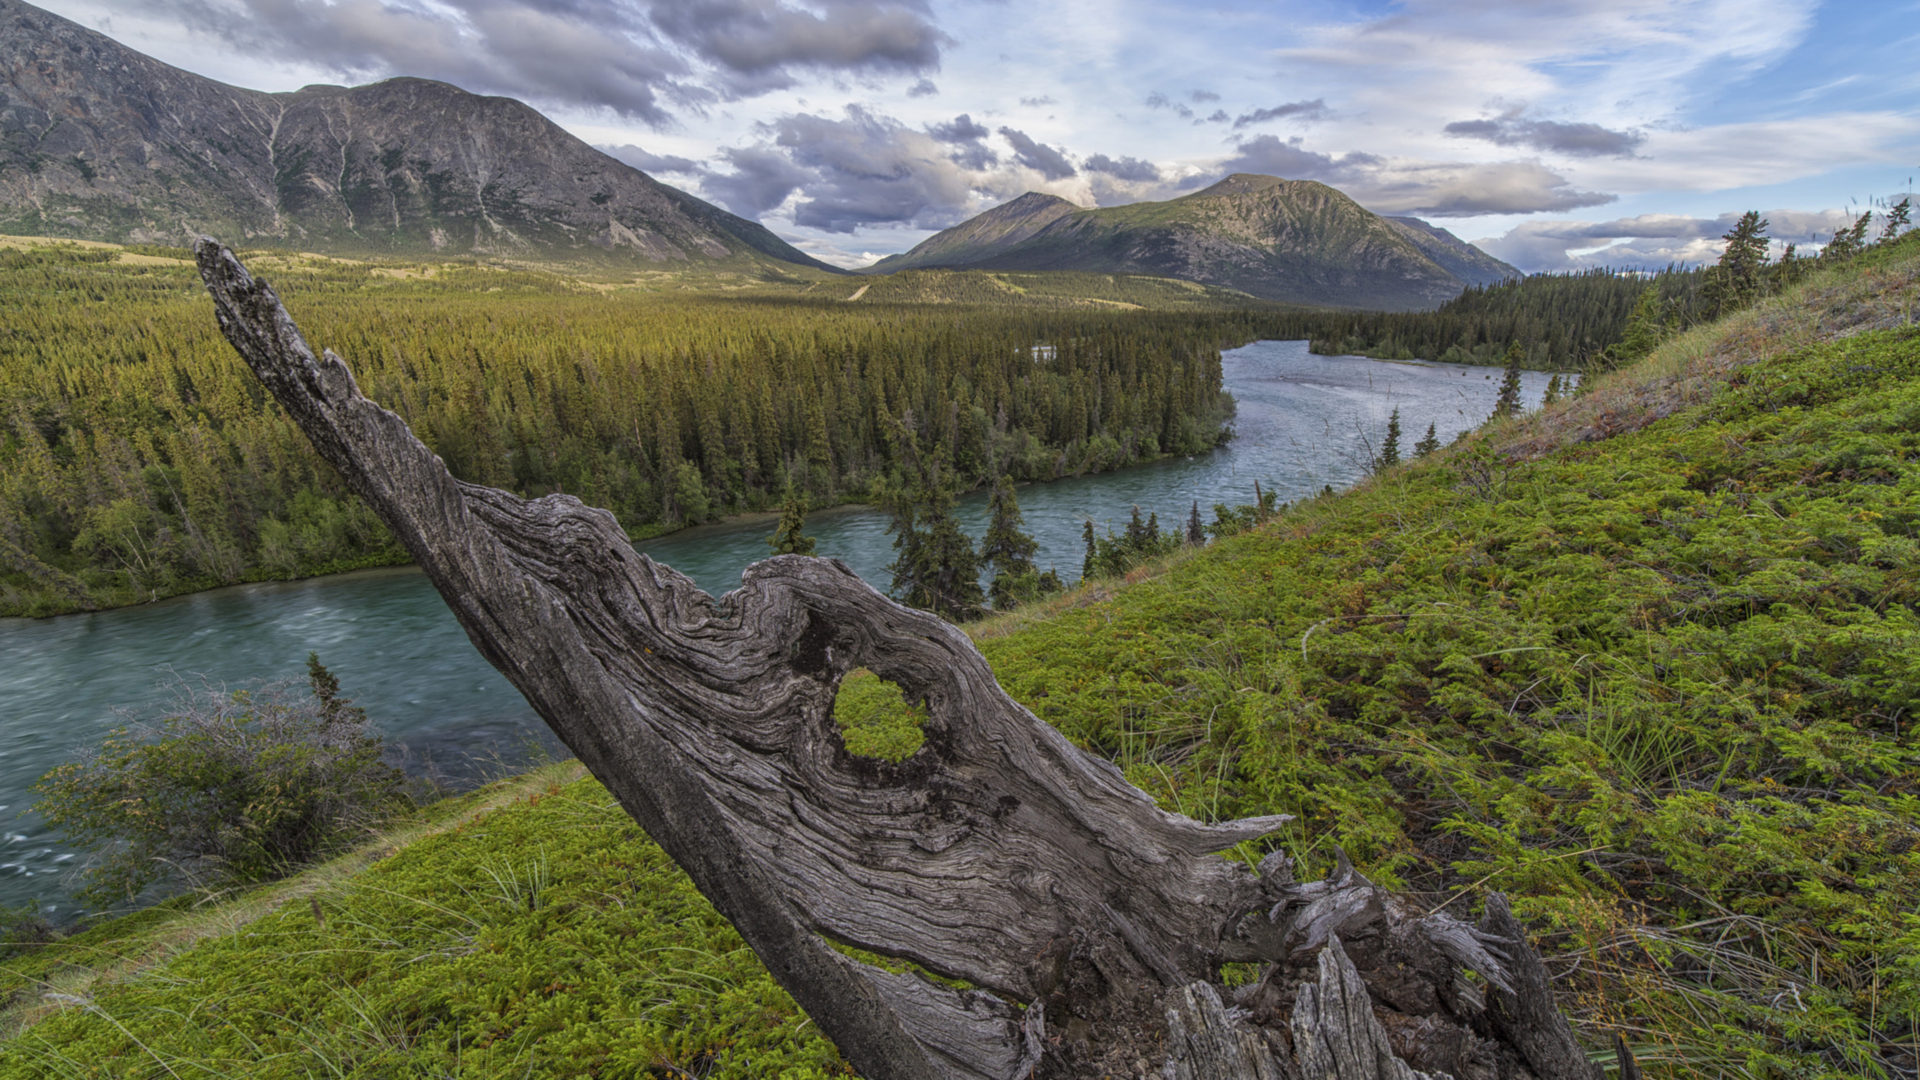 Takhini River Valley Yukon Territory Canada Nature Landscape